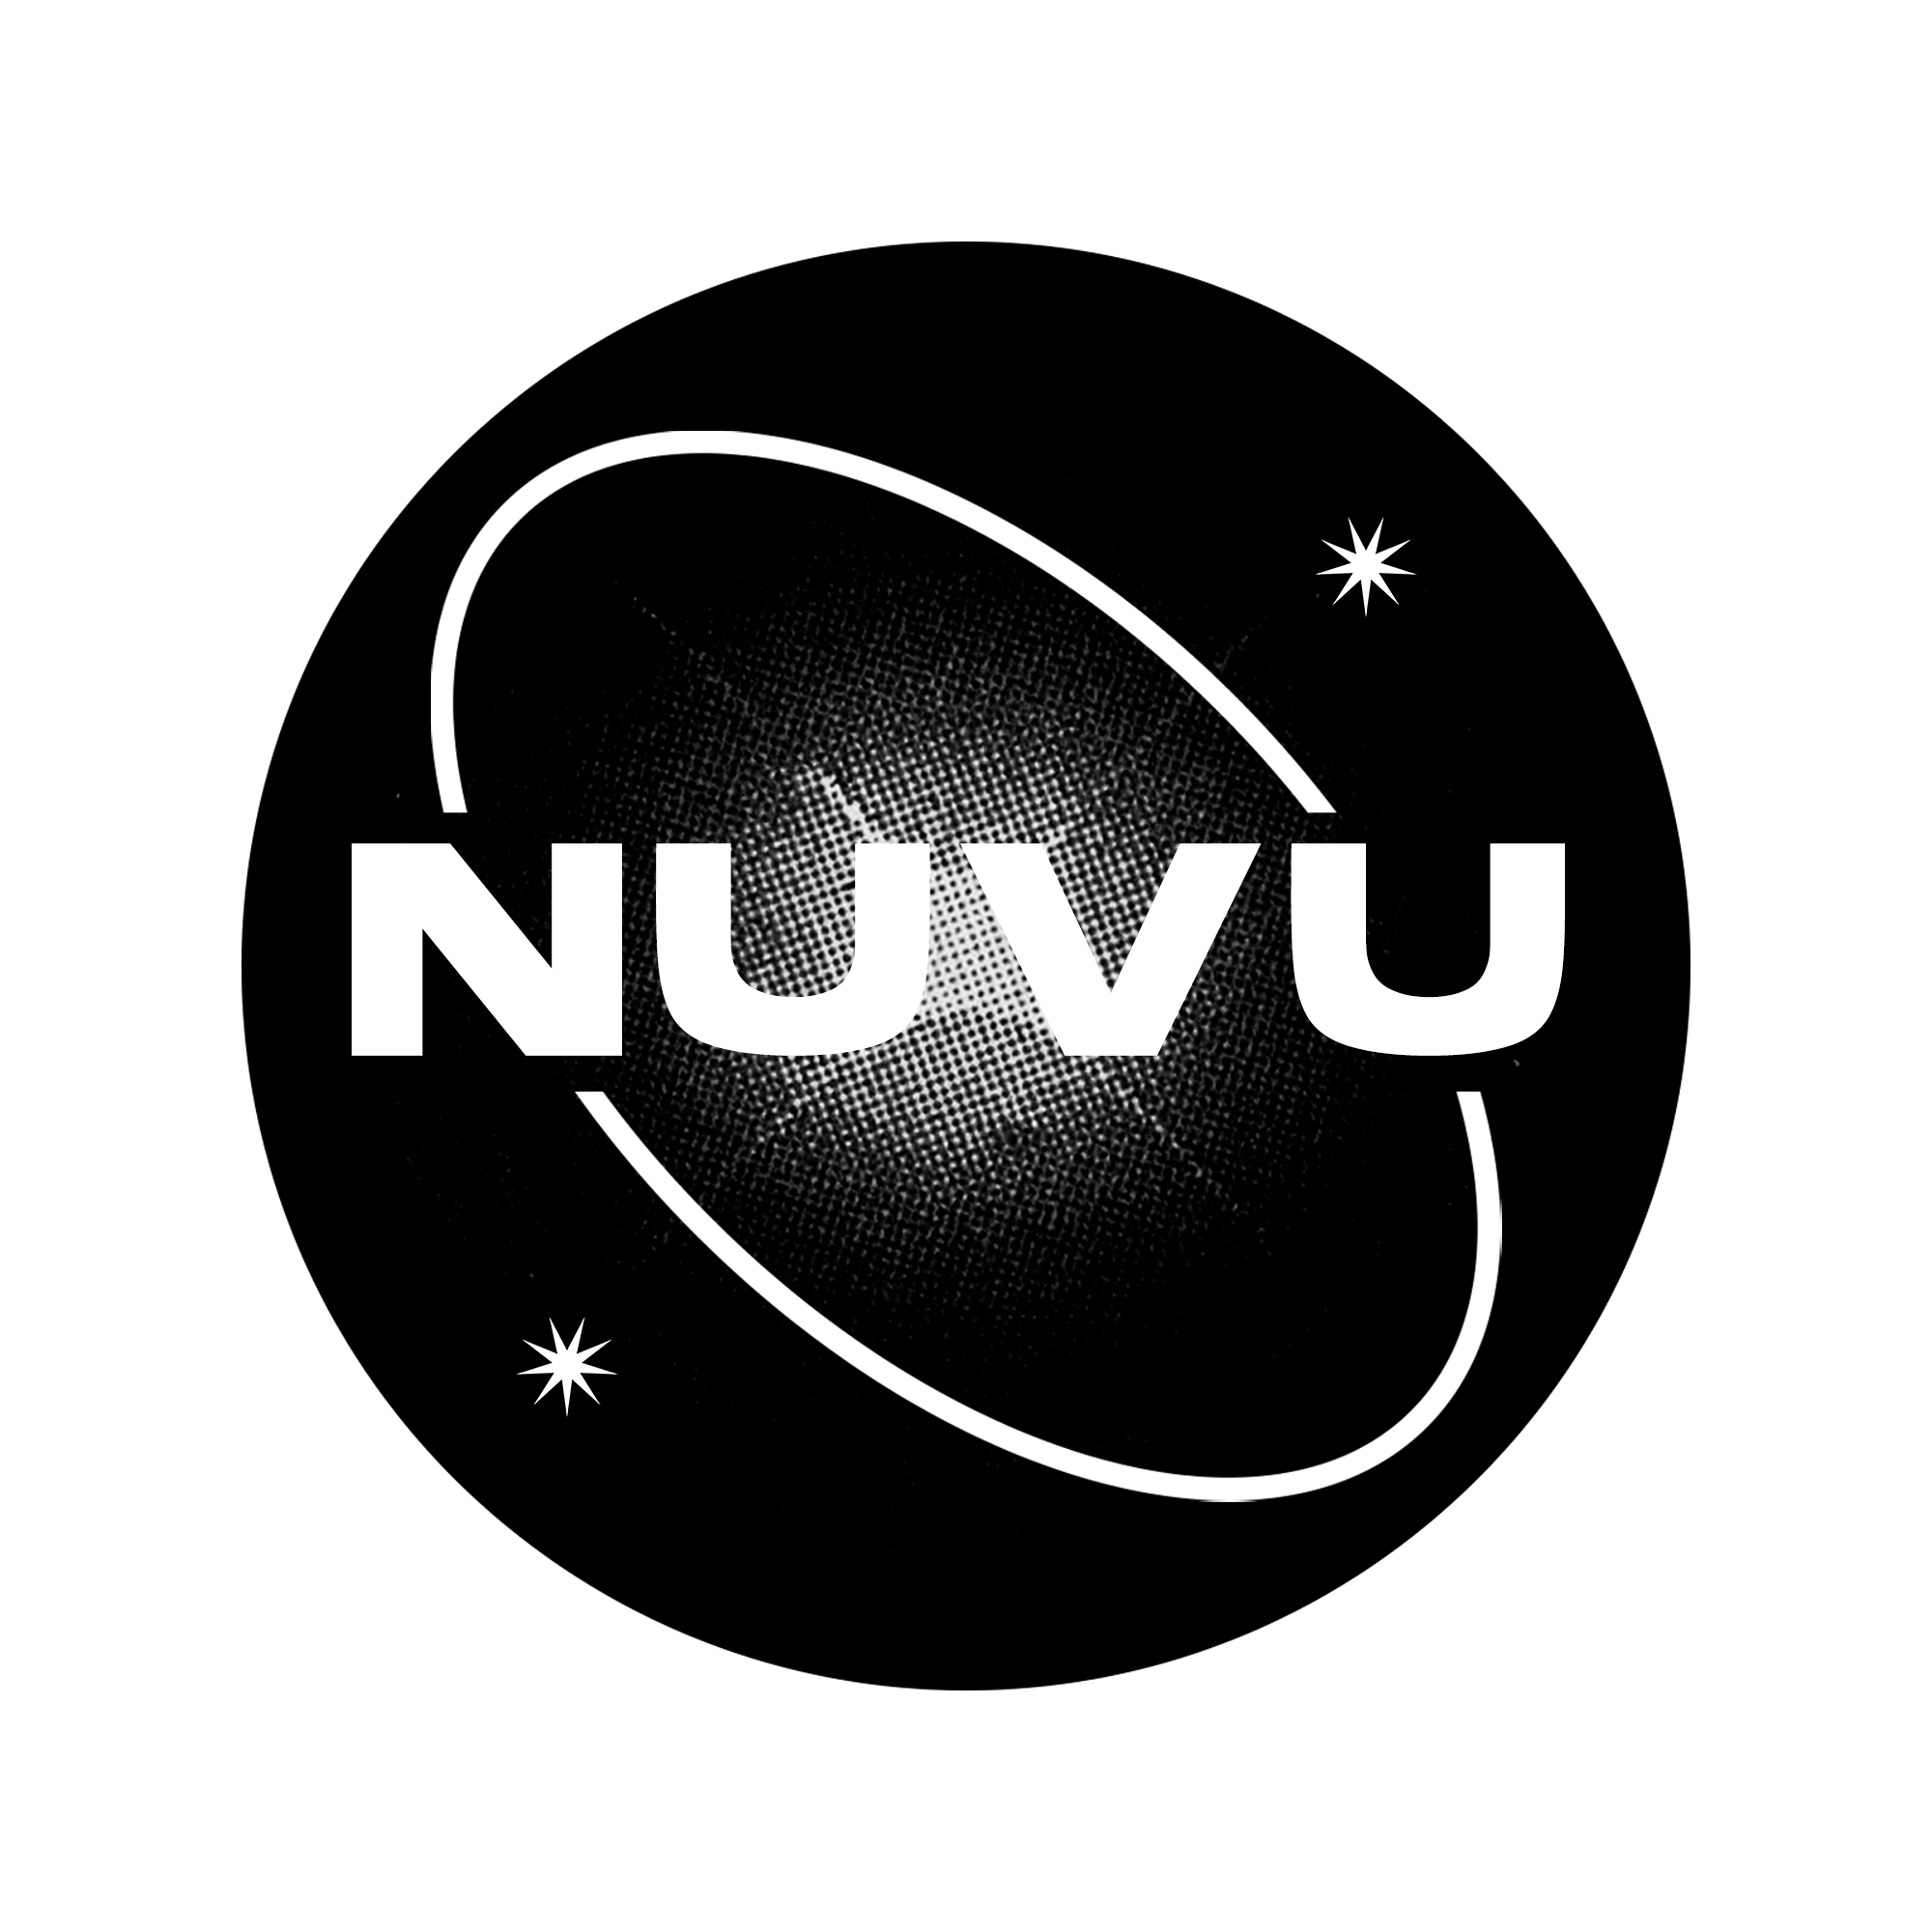 The NUVU Collective